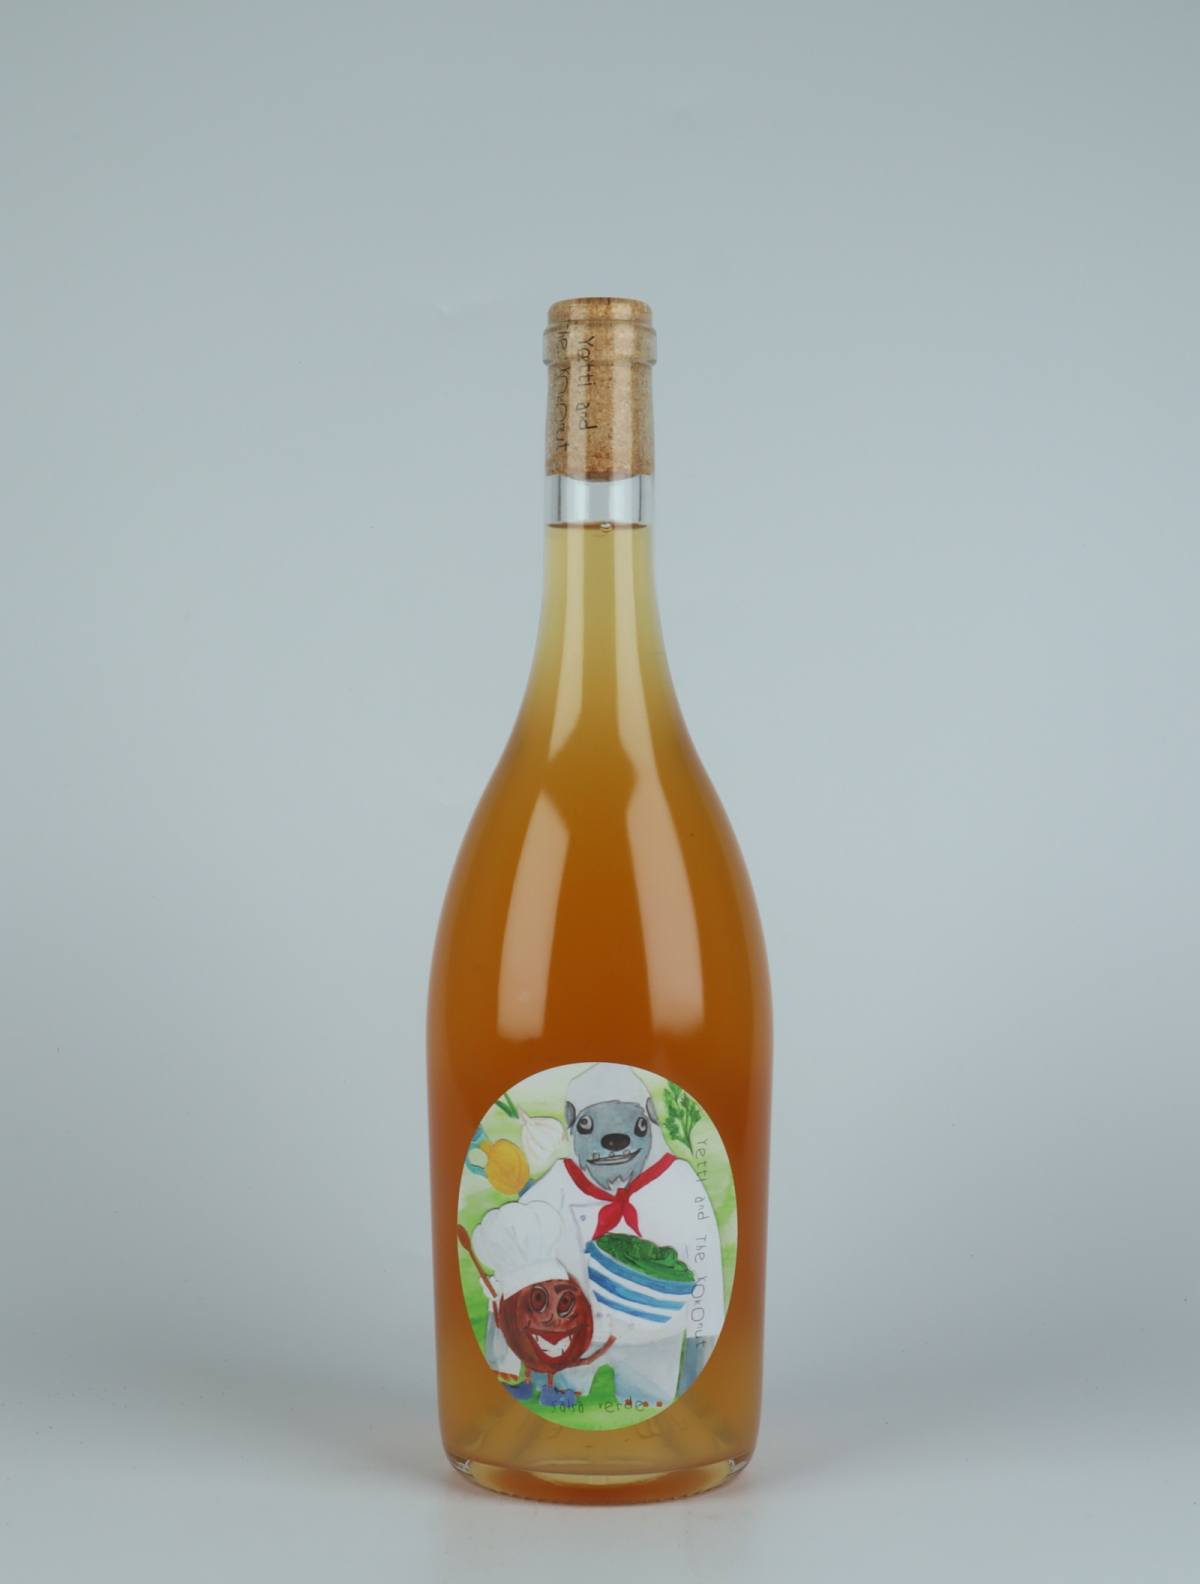 A bottle 2021 Salsa Verde Orange wine from Yetti and the Kokonut, Adelaide Hills in Australia